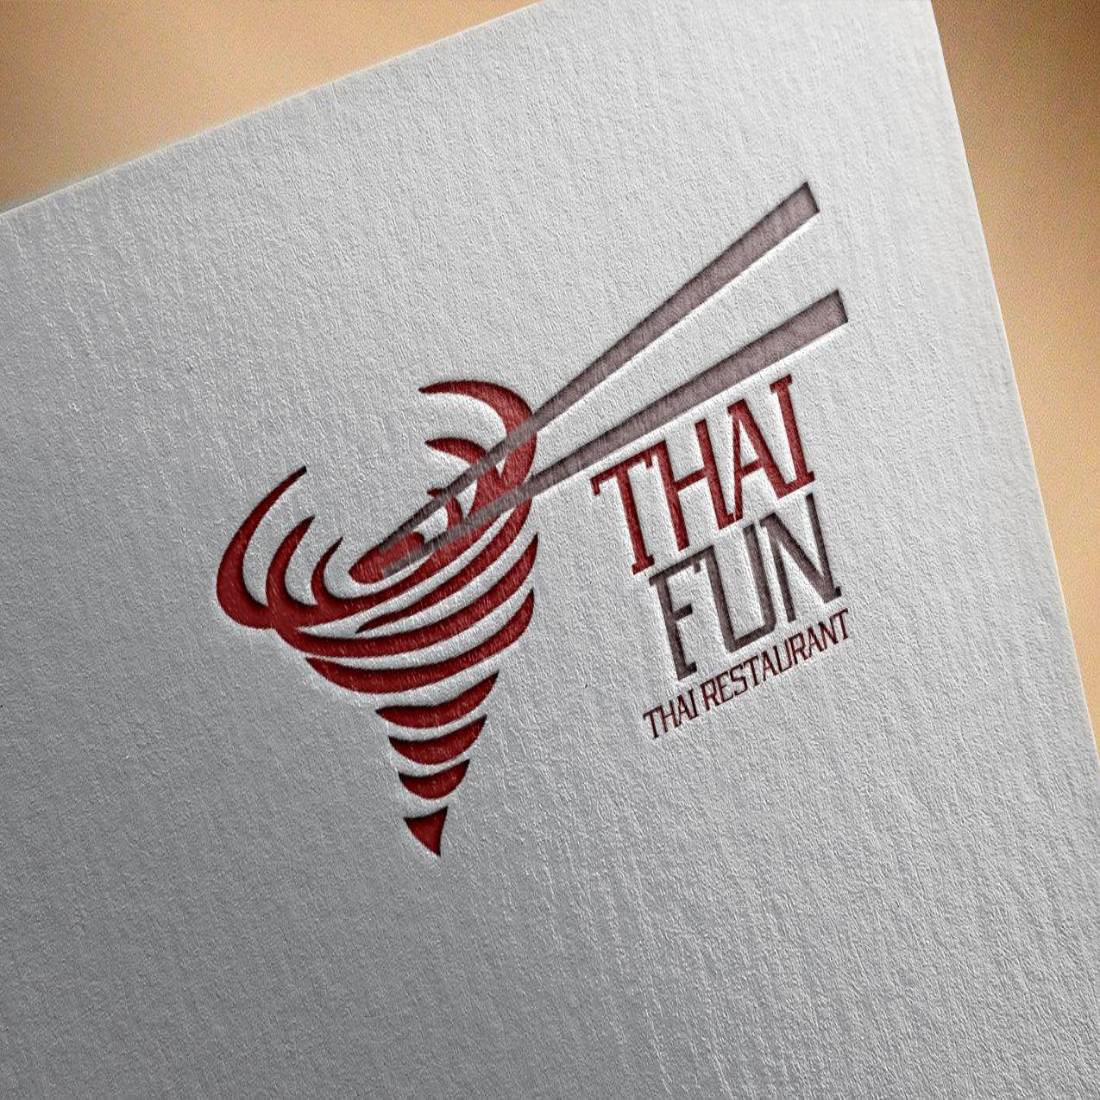 Thai Restaurant Logo Design cover image.